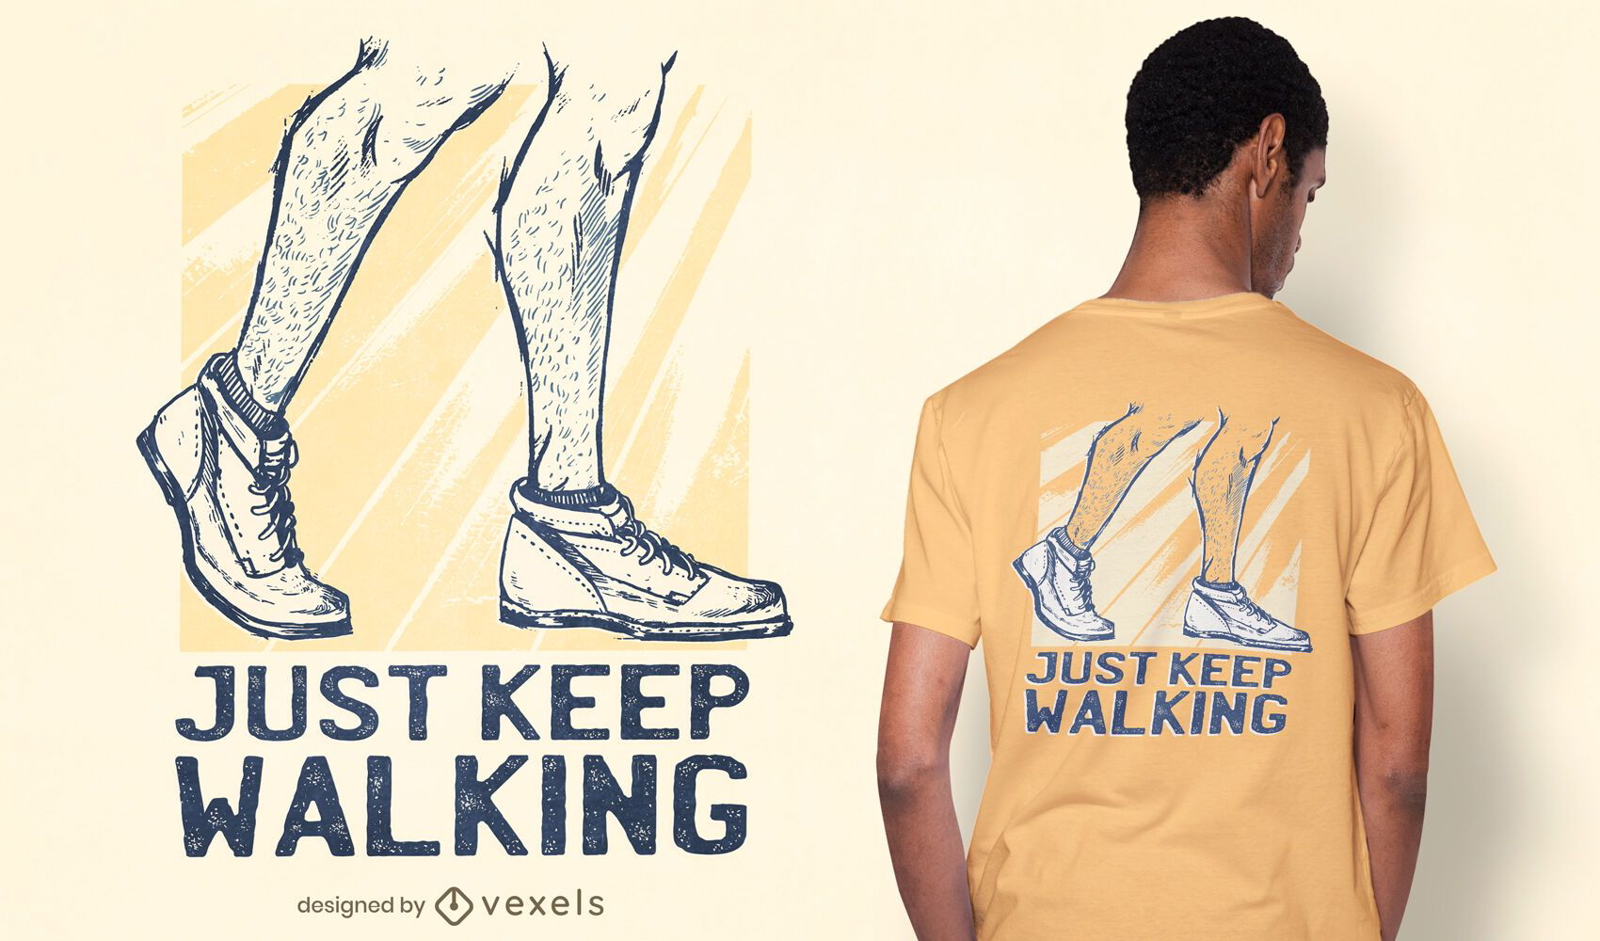 Just keep walking t-shirt design